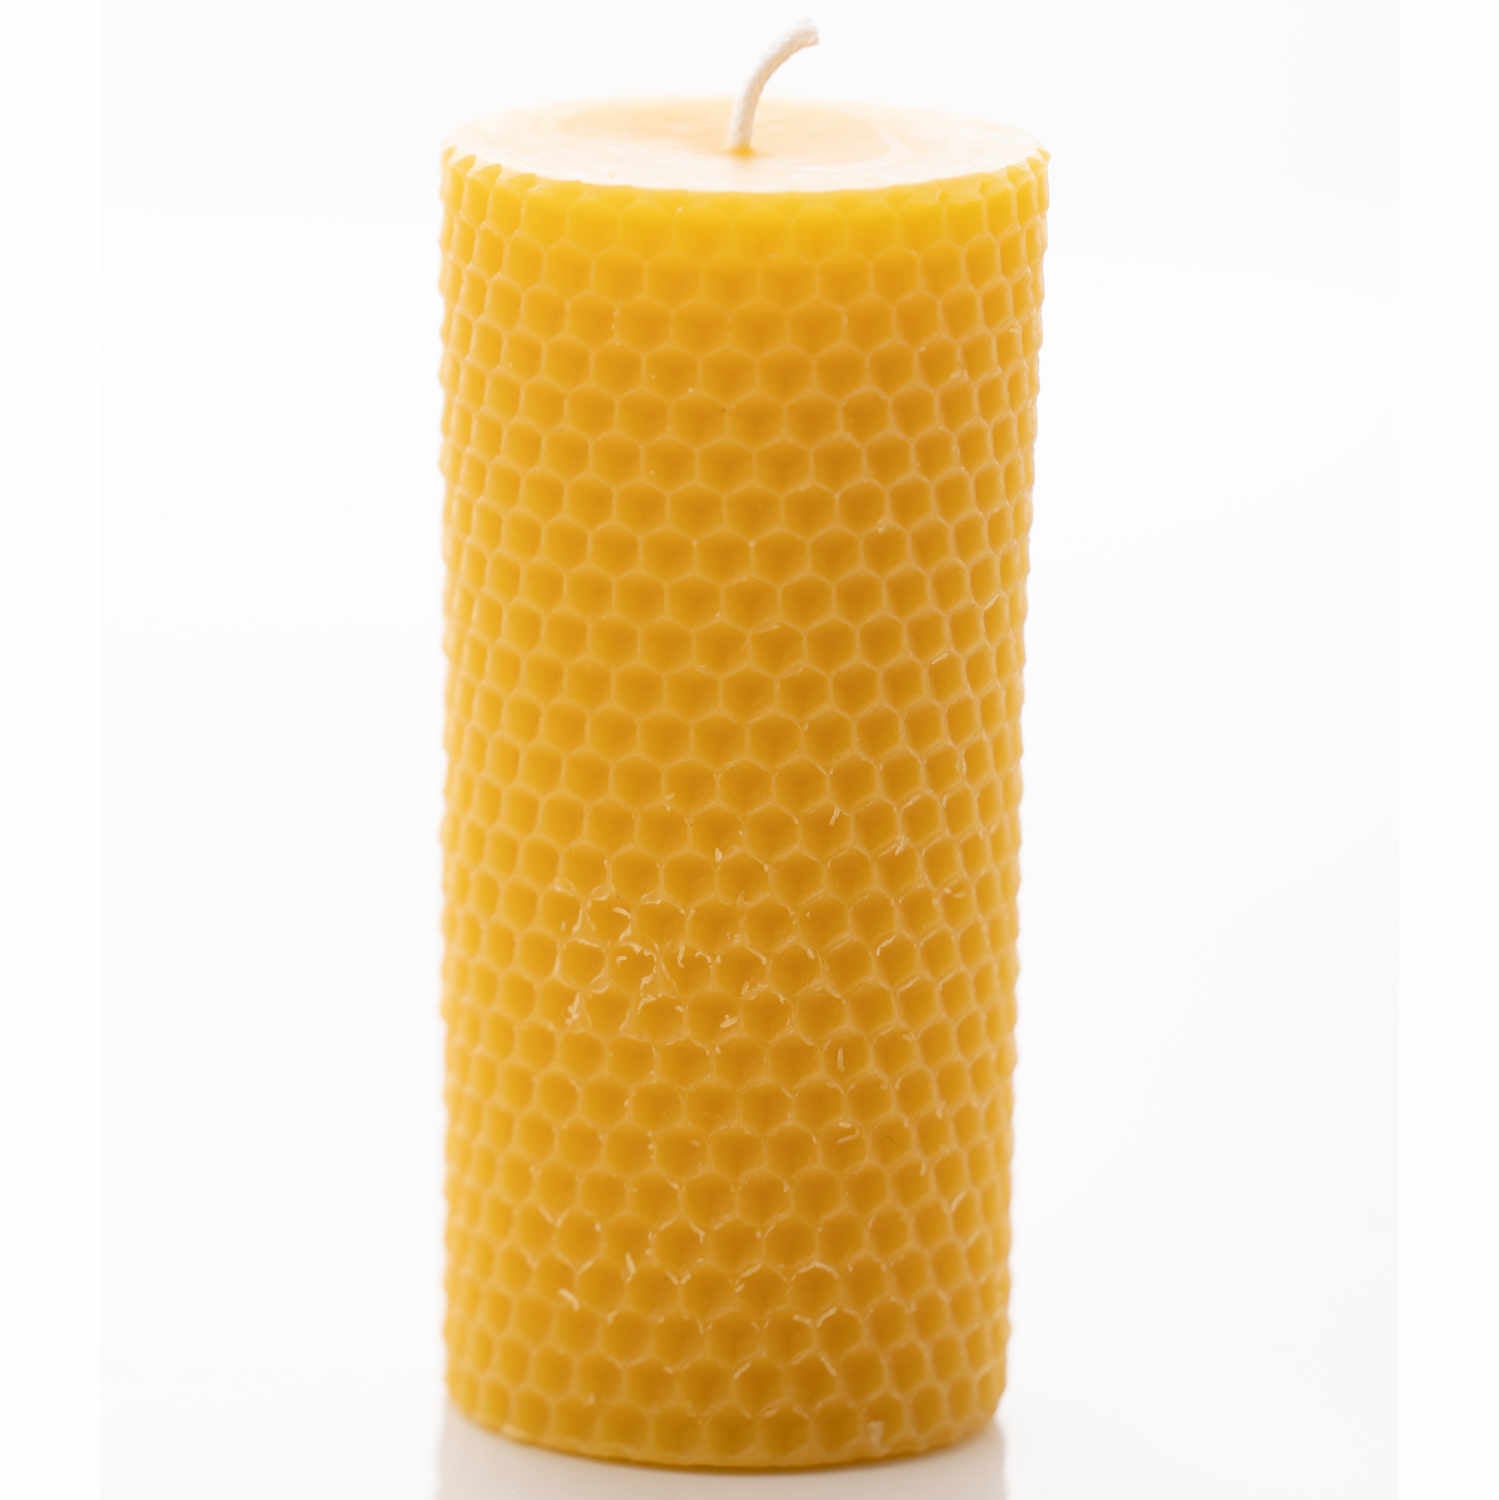 172 pcs Pillar Beeswax Candles Bulk 100% PURE Bees Wax Candles Handmade  Vintage